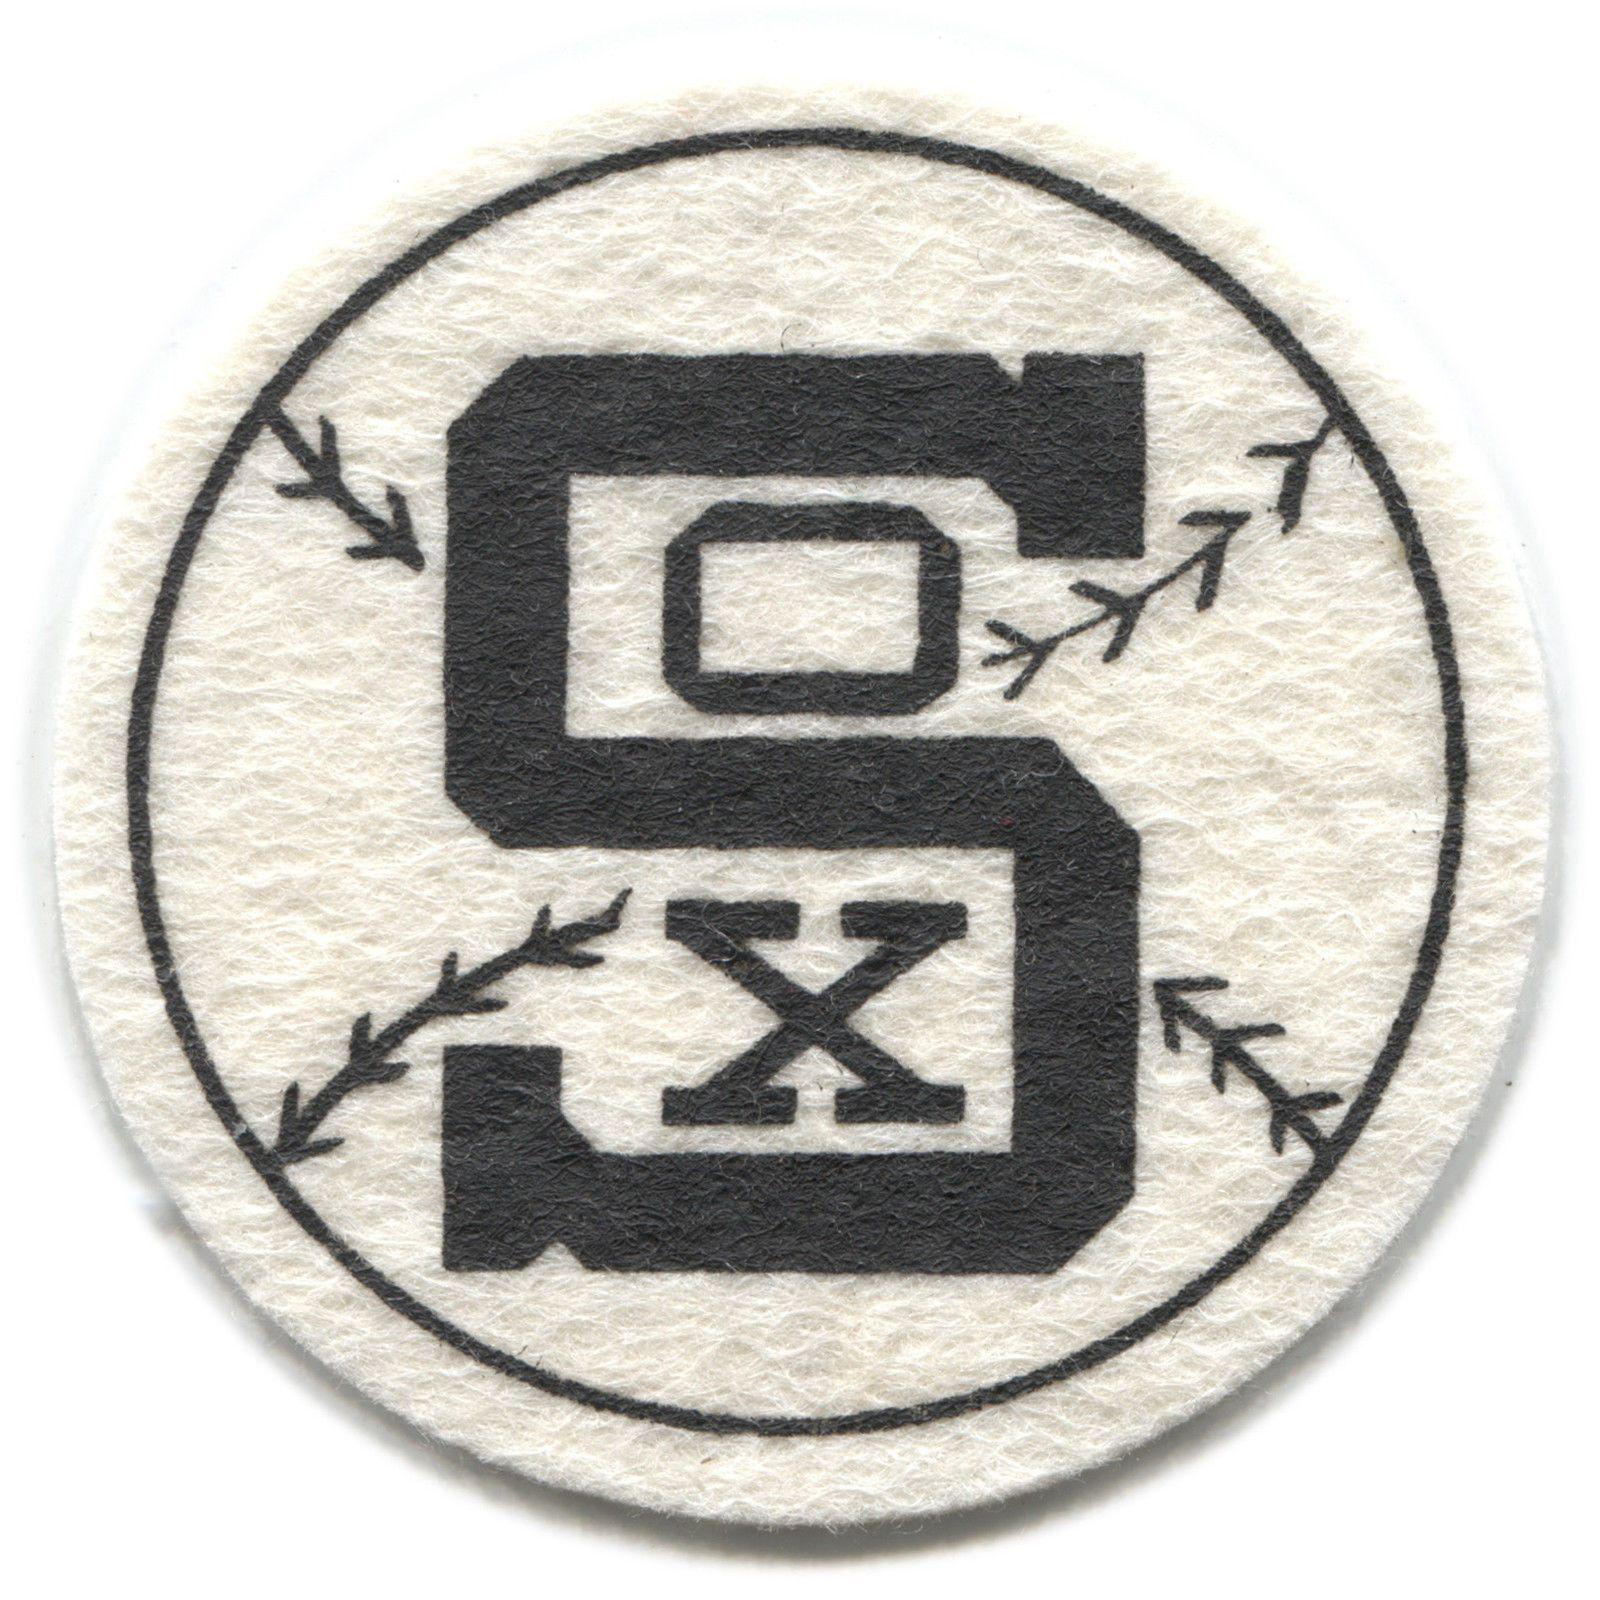 White Sox Old Logo - 1954 chicago white sox mlb baseball best and co. vintage 2.5